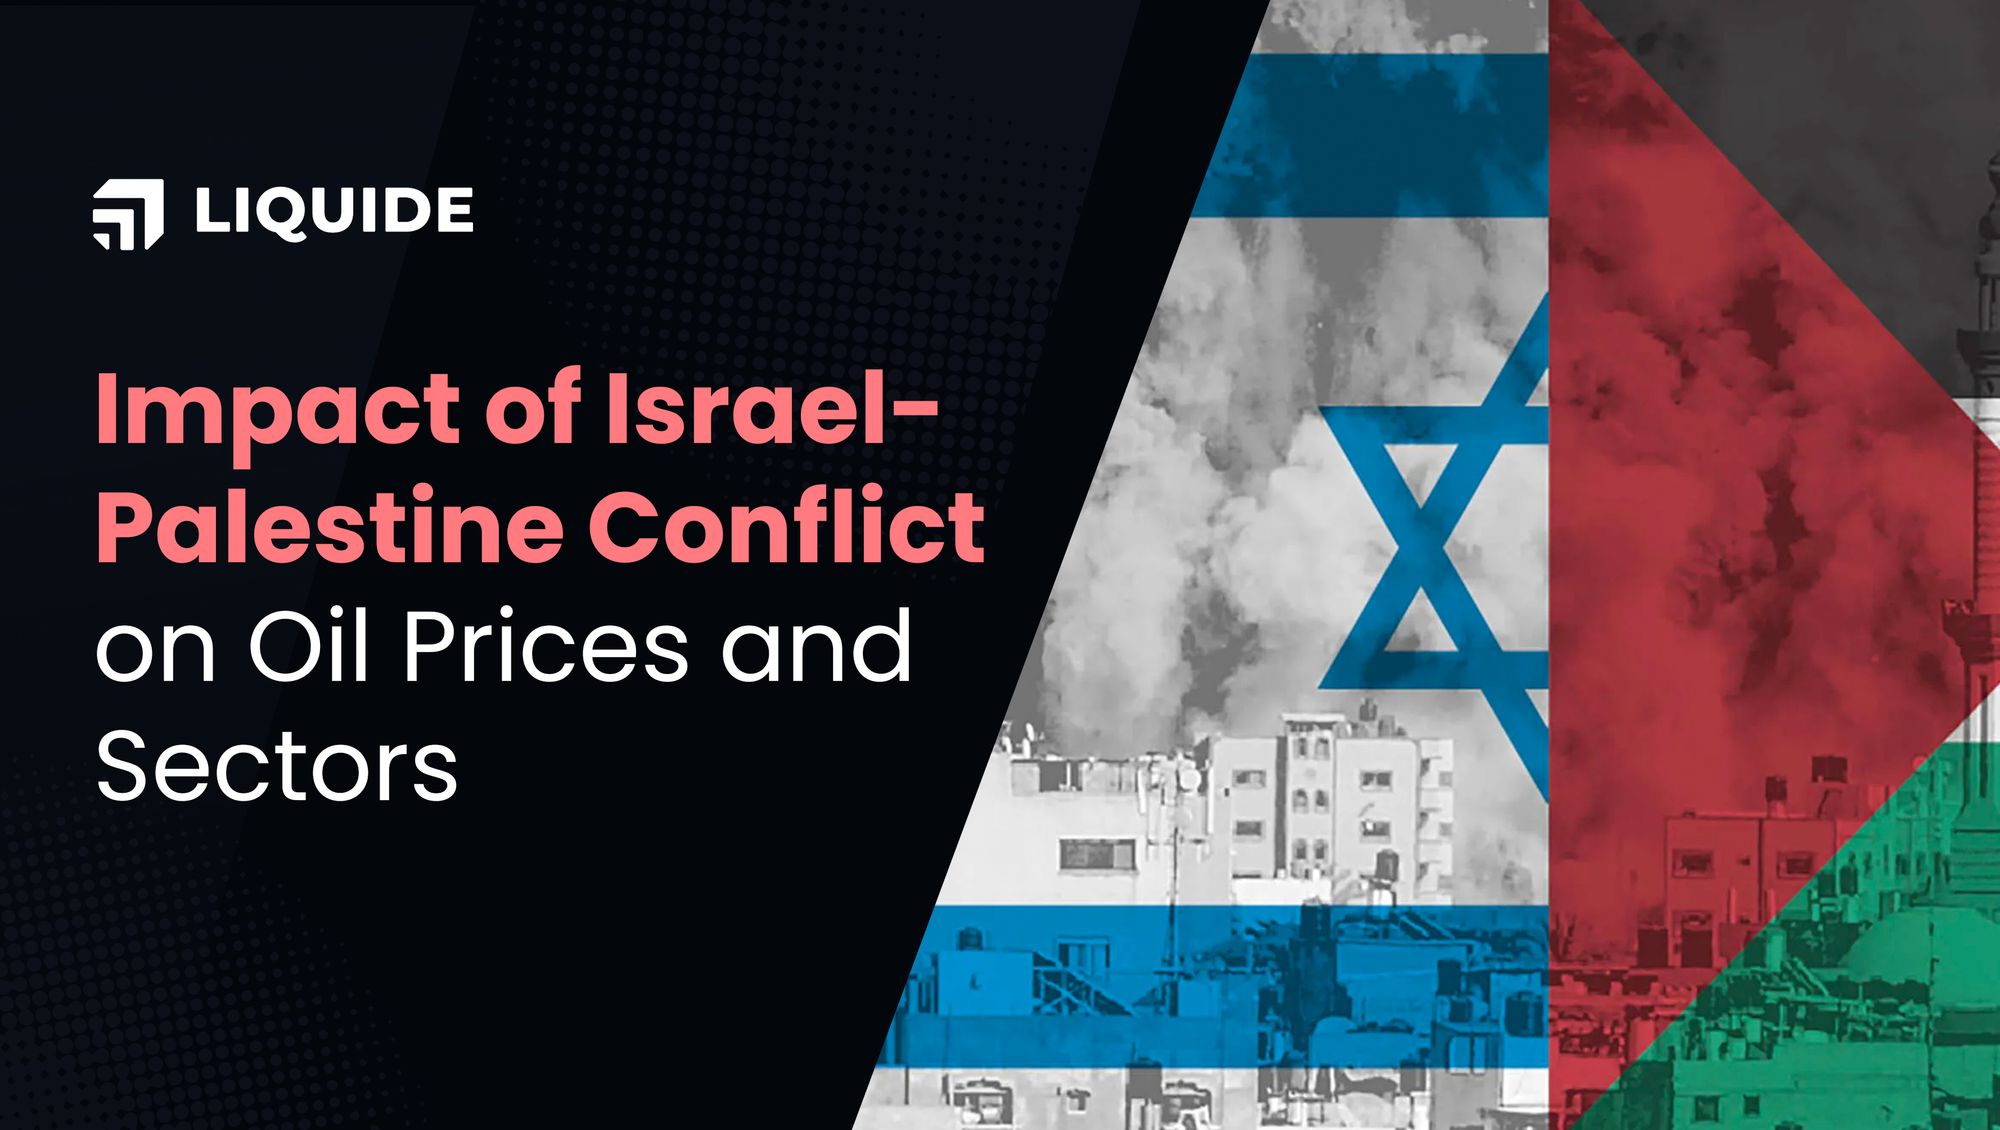 israel palestine war, israel palestine conflict, israel, palestine, crude oil price, liquide